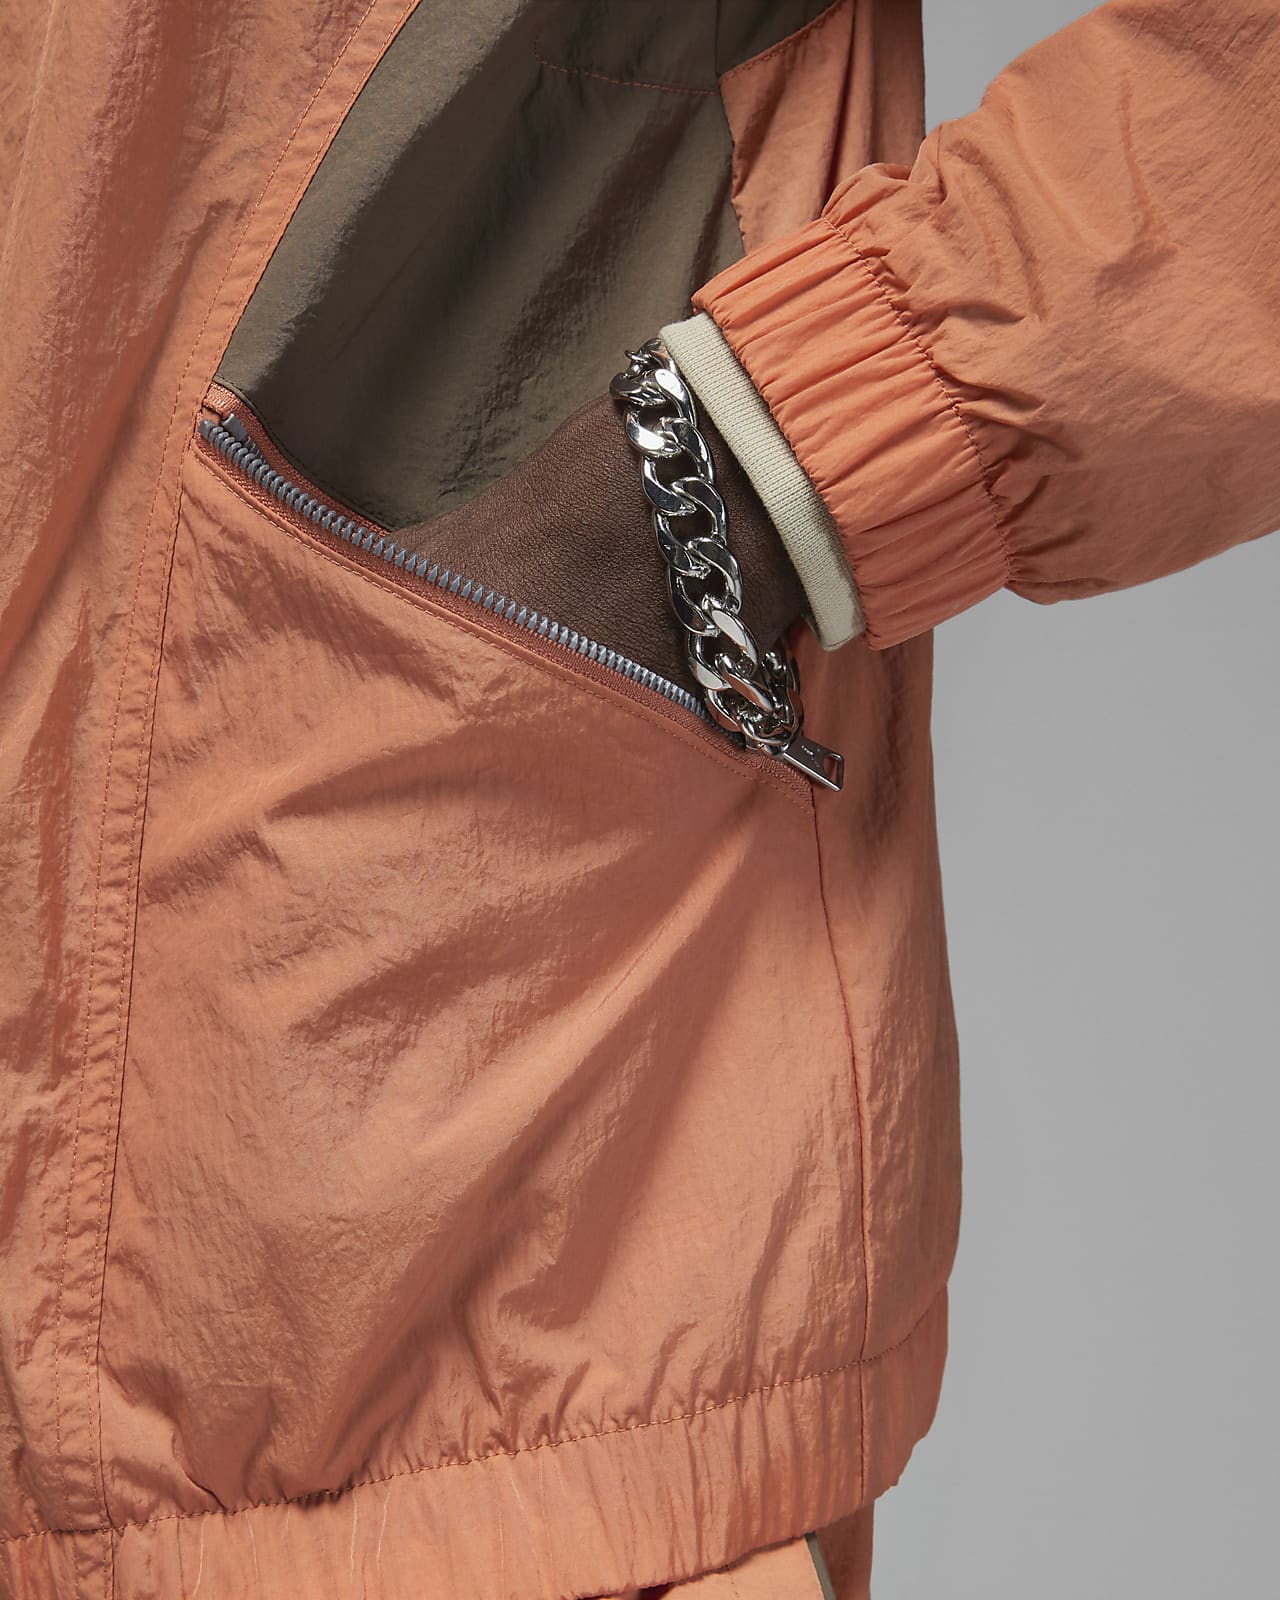 Jordan Essentials Men's Poly Puffer Jacket. Nike LU